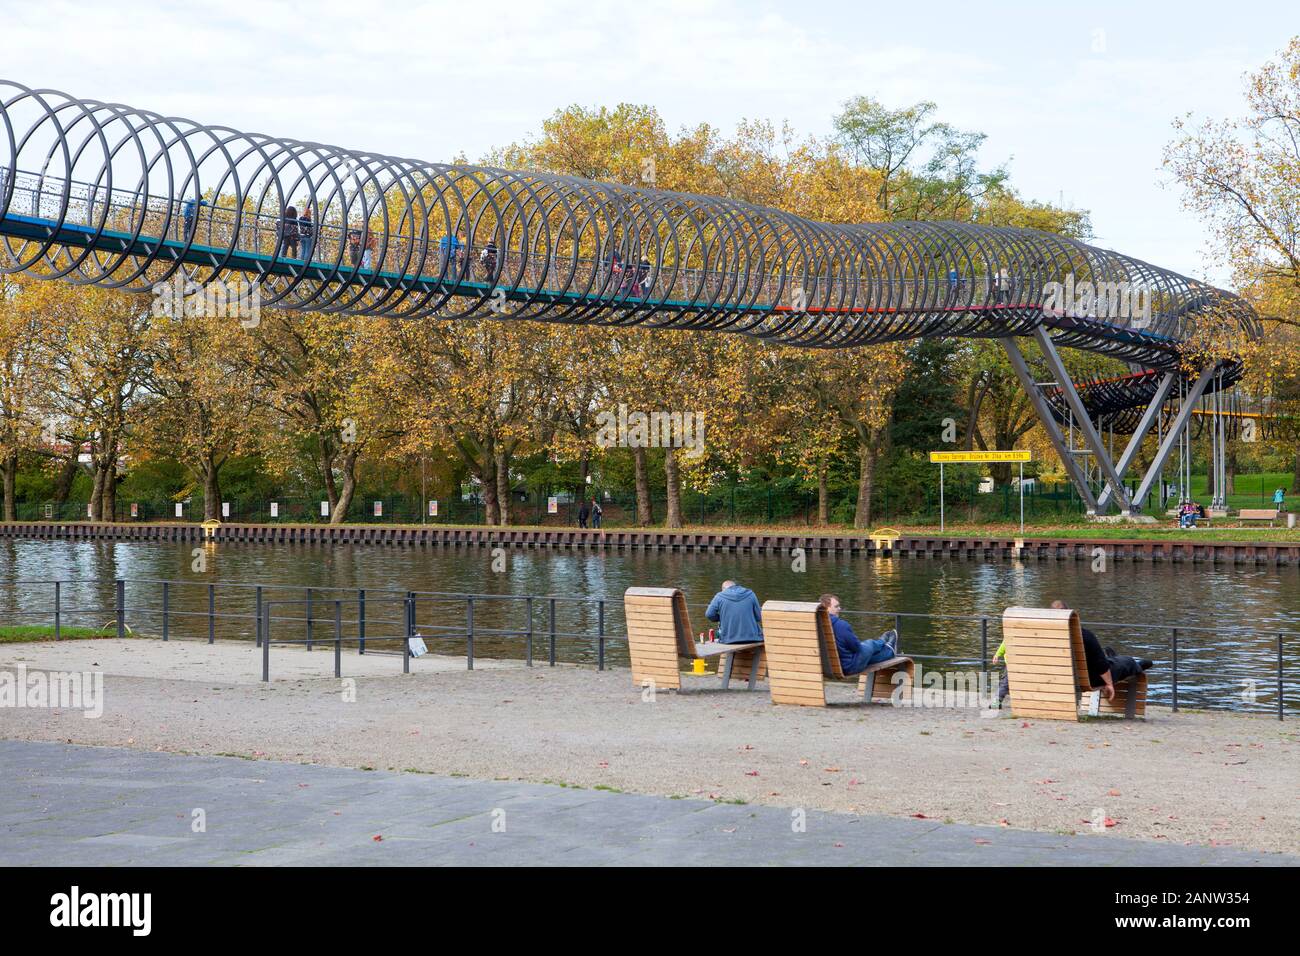 Slinky molle per fama, ponte pedonale da Tobias Rehberger, Rhine-Herne Canal, Oberhausen, Germania Foto Stock